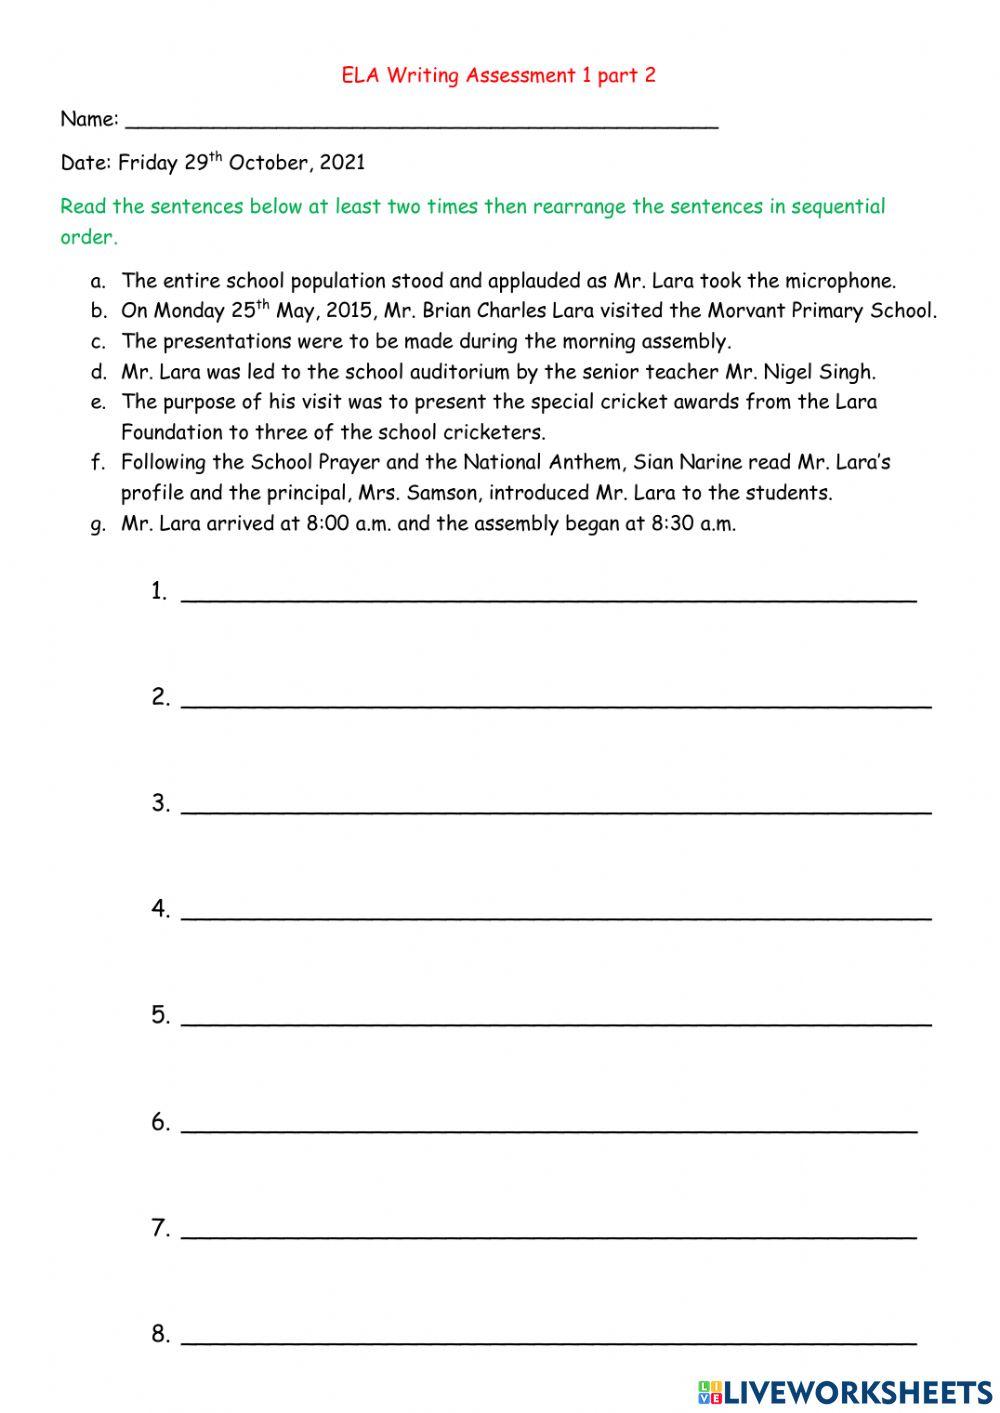 ELA Writing assessment 1 part 2